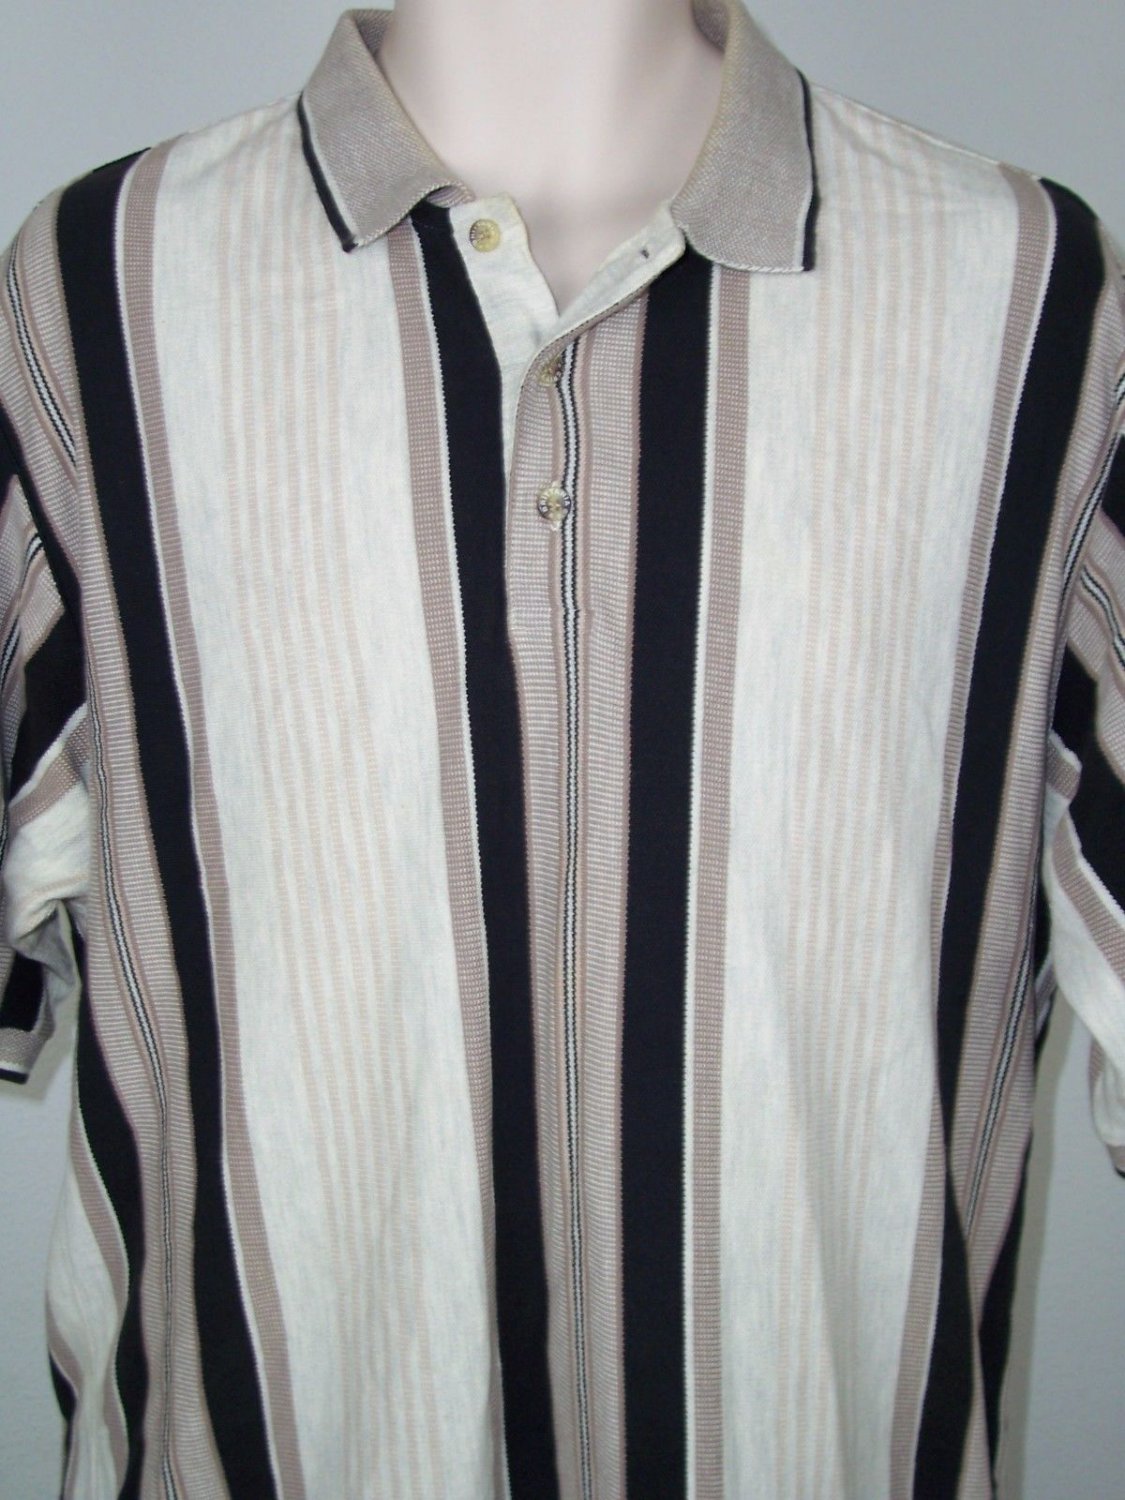 Brittania Men's Vintage Polo Shirt Sz Large Striped Multicolor Short Sleeve